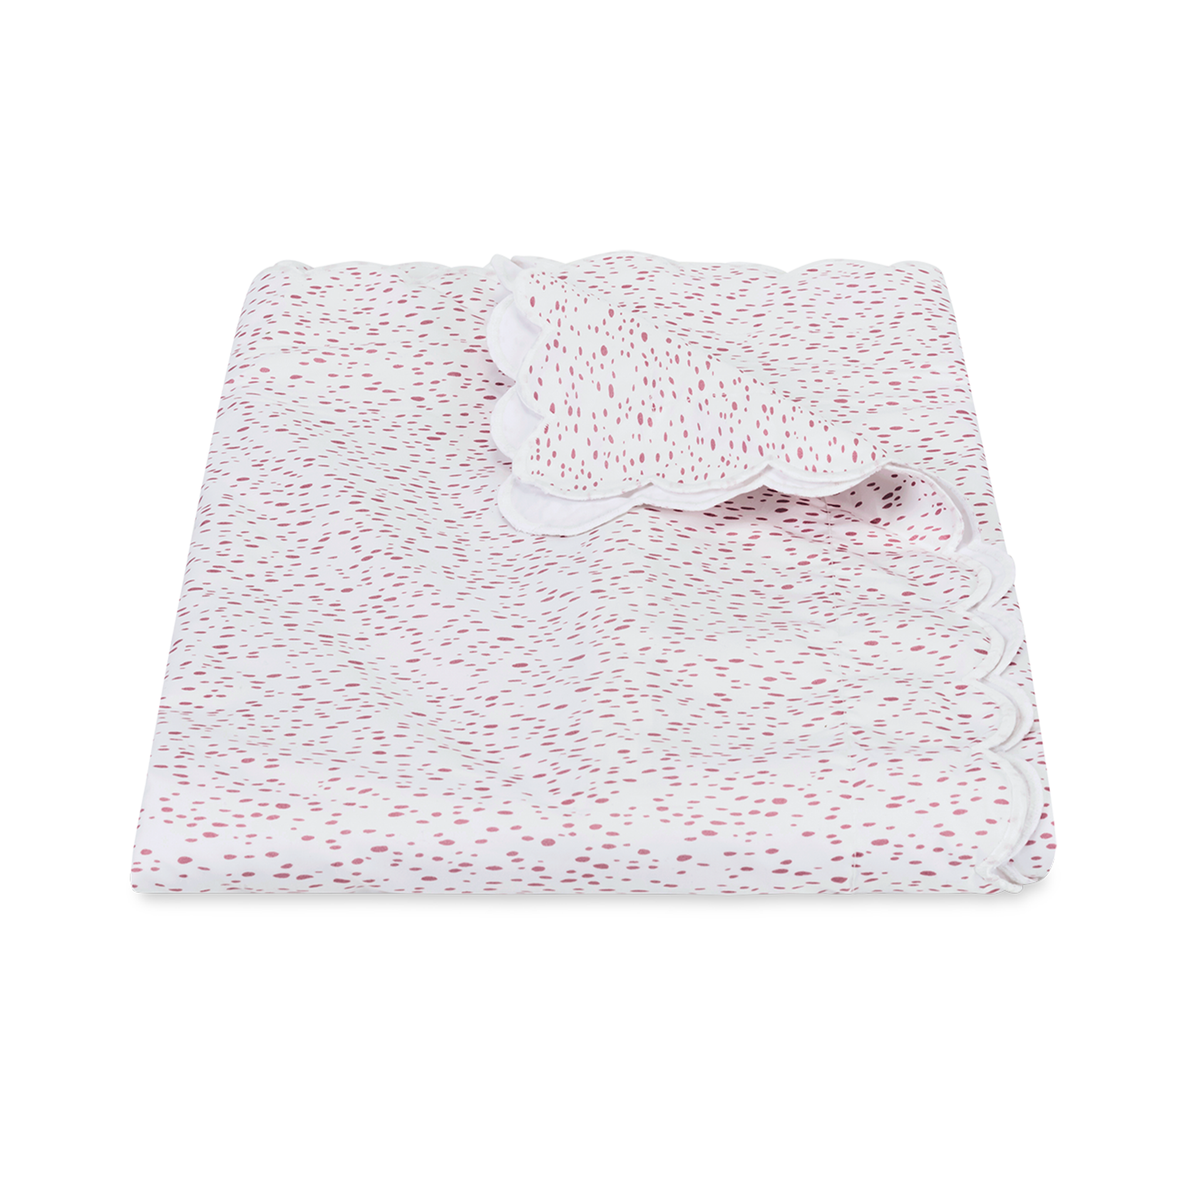 Duvet Cover of Matouk Celine Bedding in Pink Color